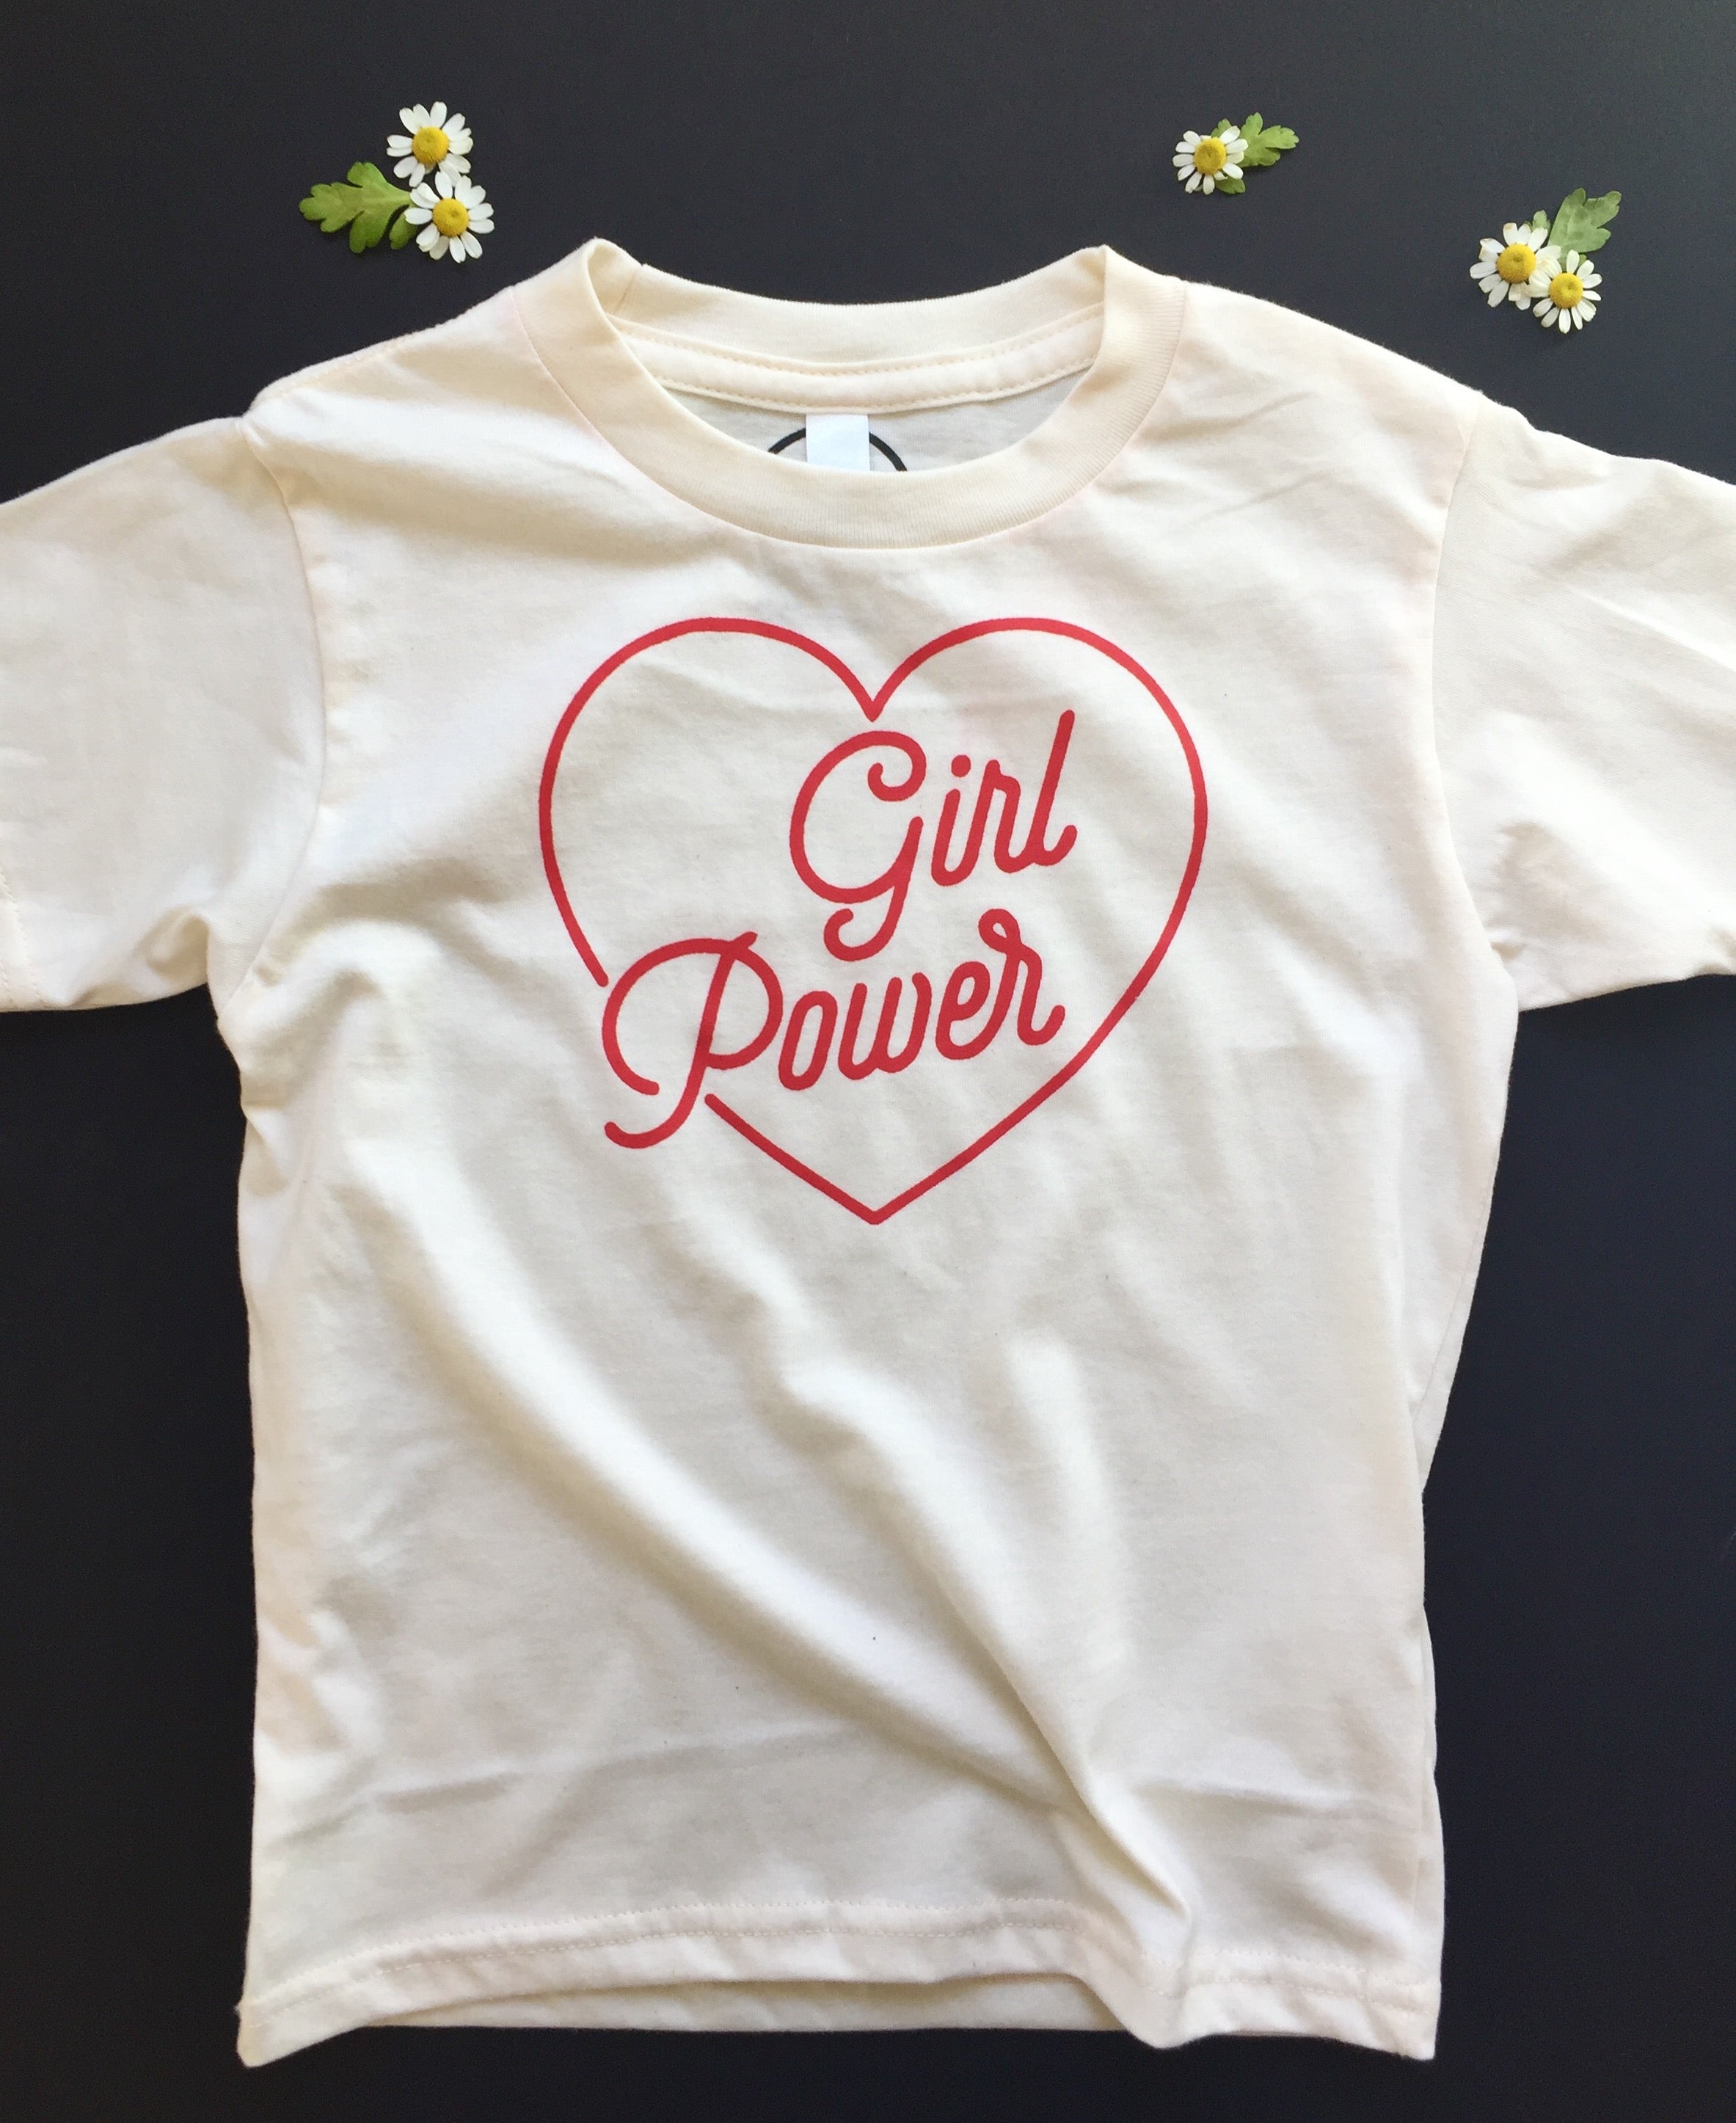 NWT Gymboree Girl Power Tee Shirt Top Girls Spring Forward 4,14